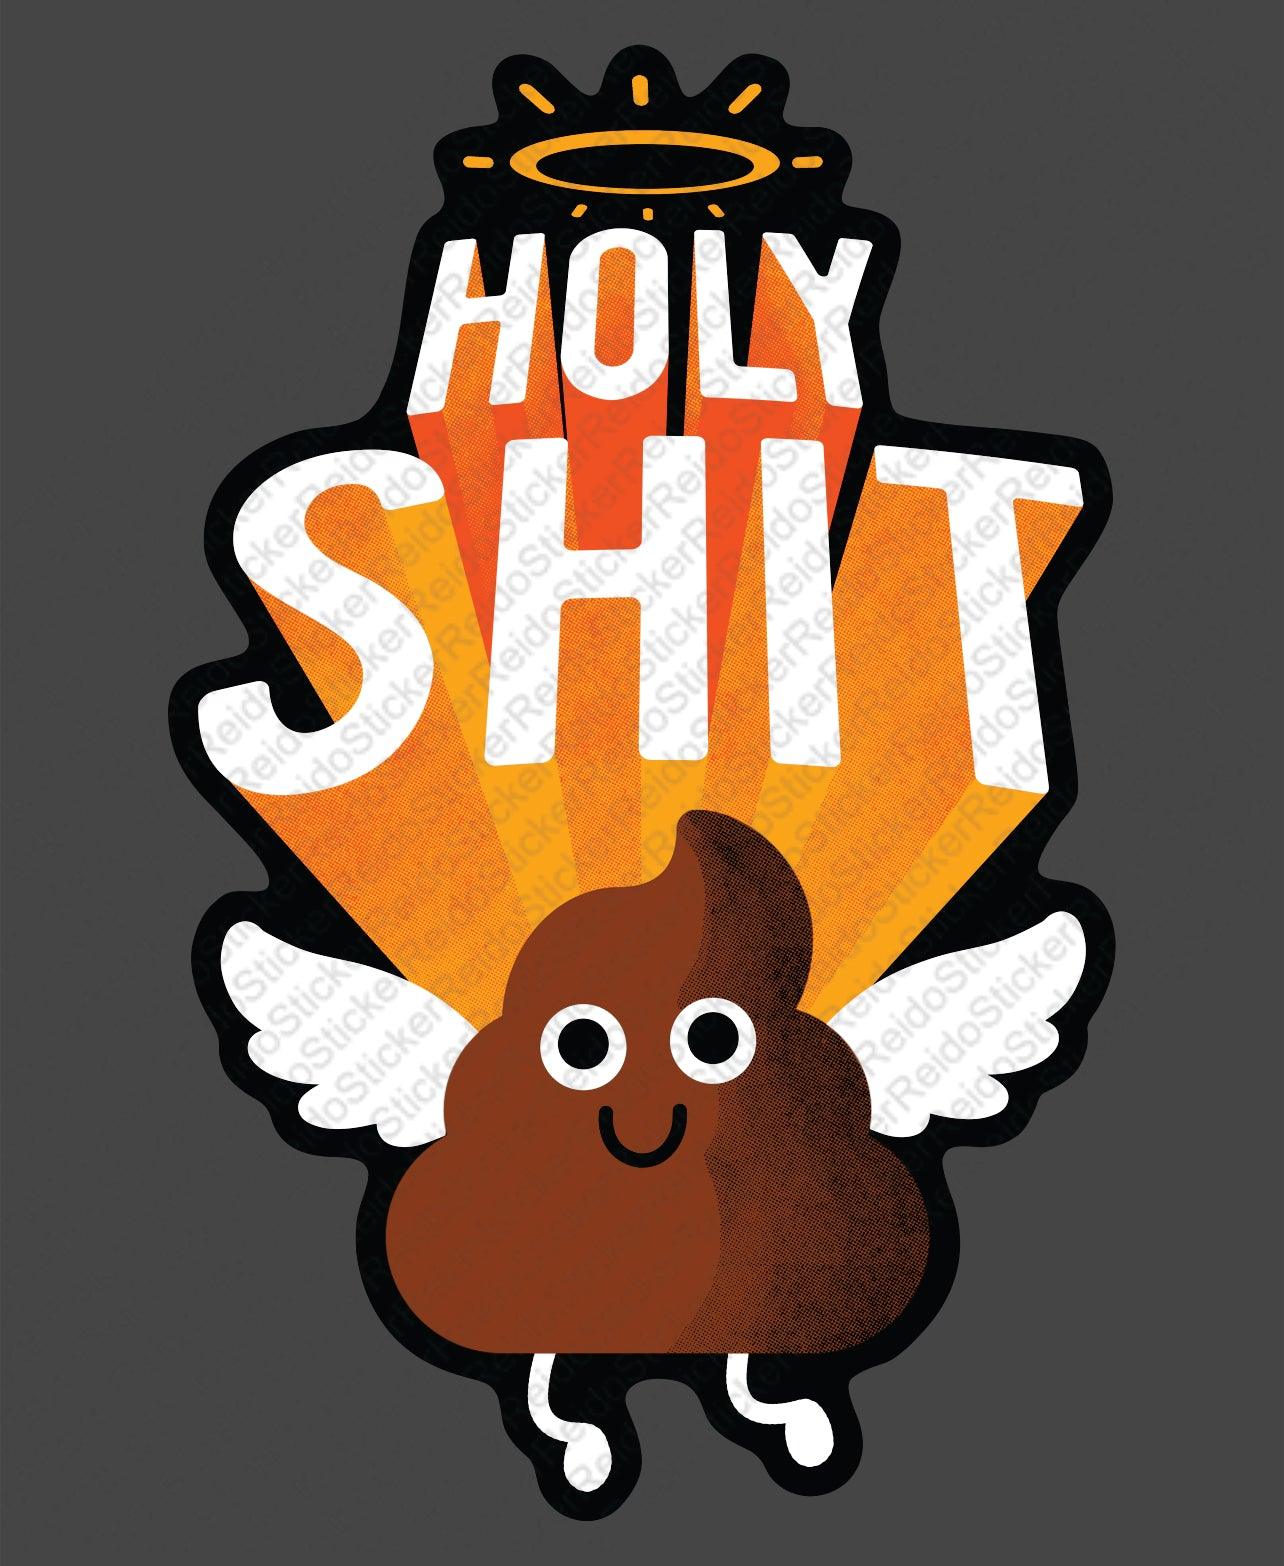 Holy Shit - Rei do Sticker